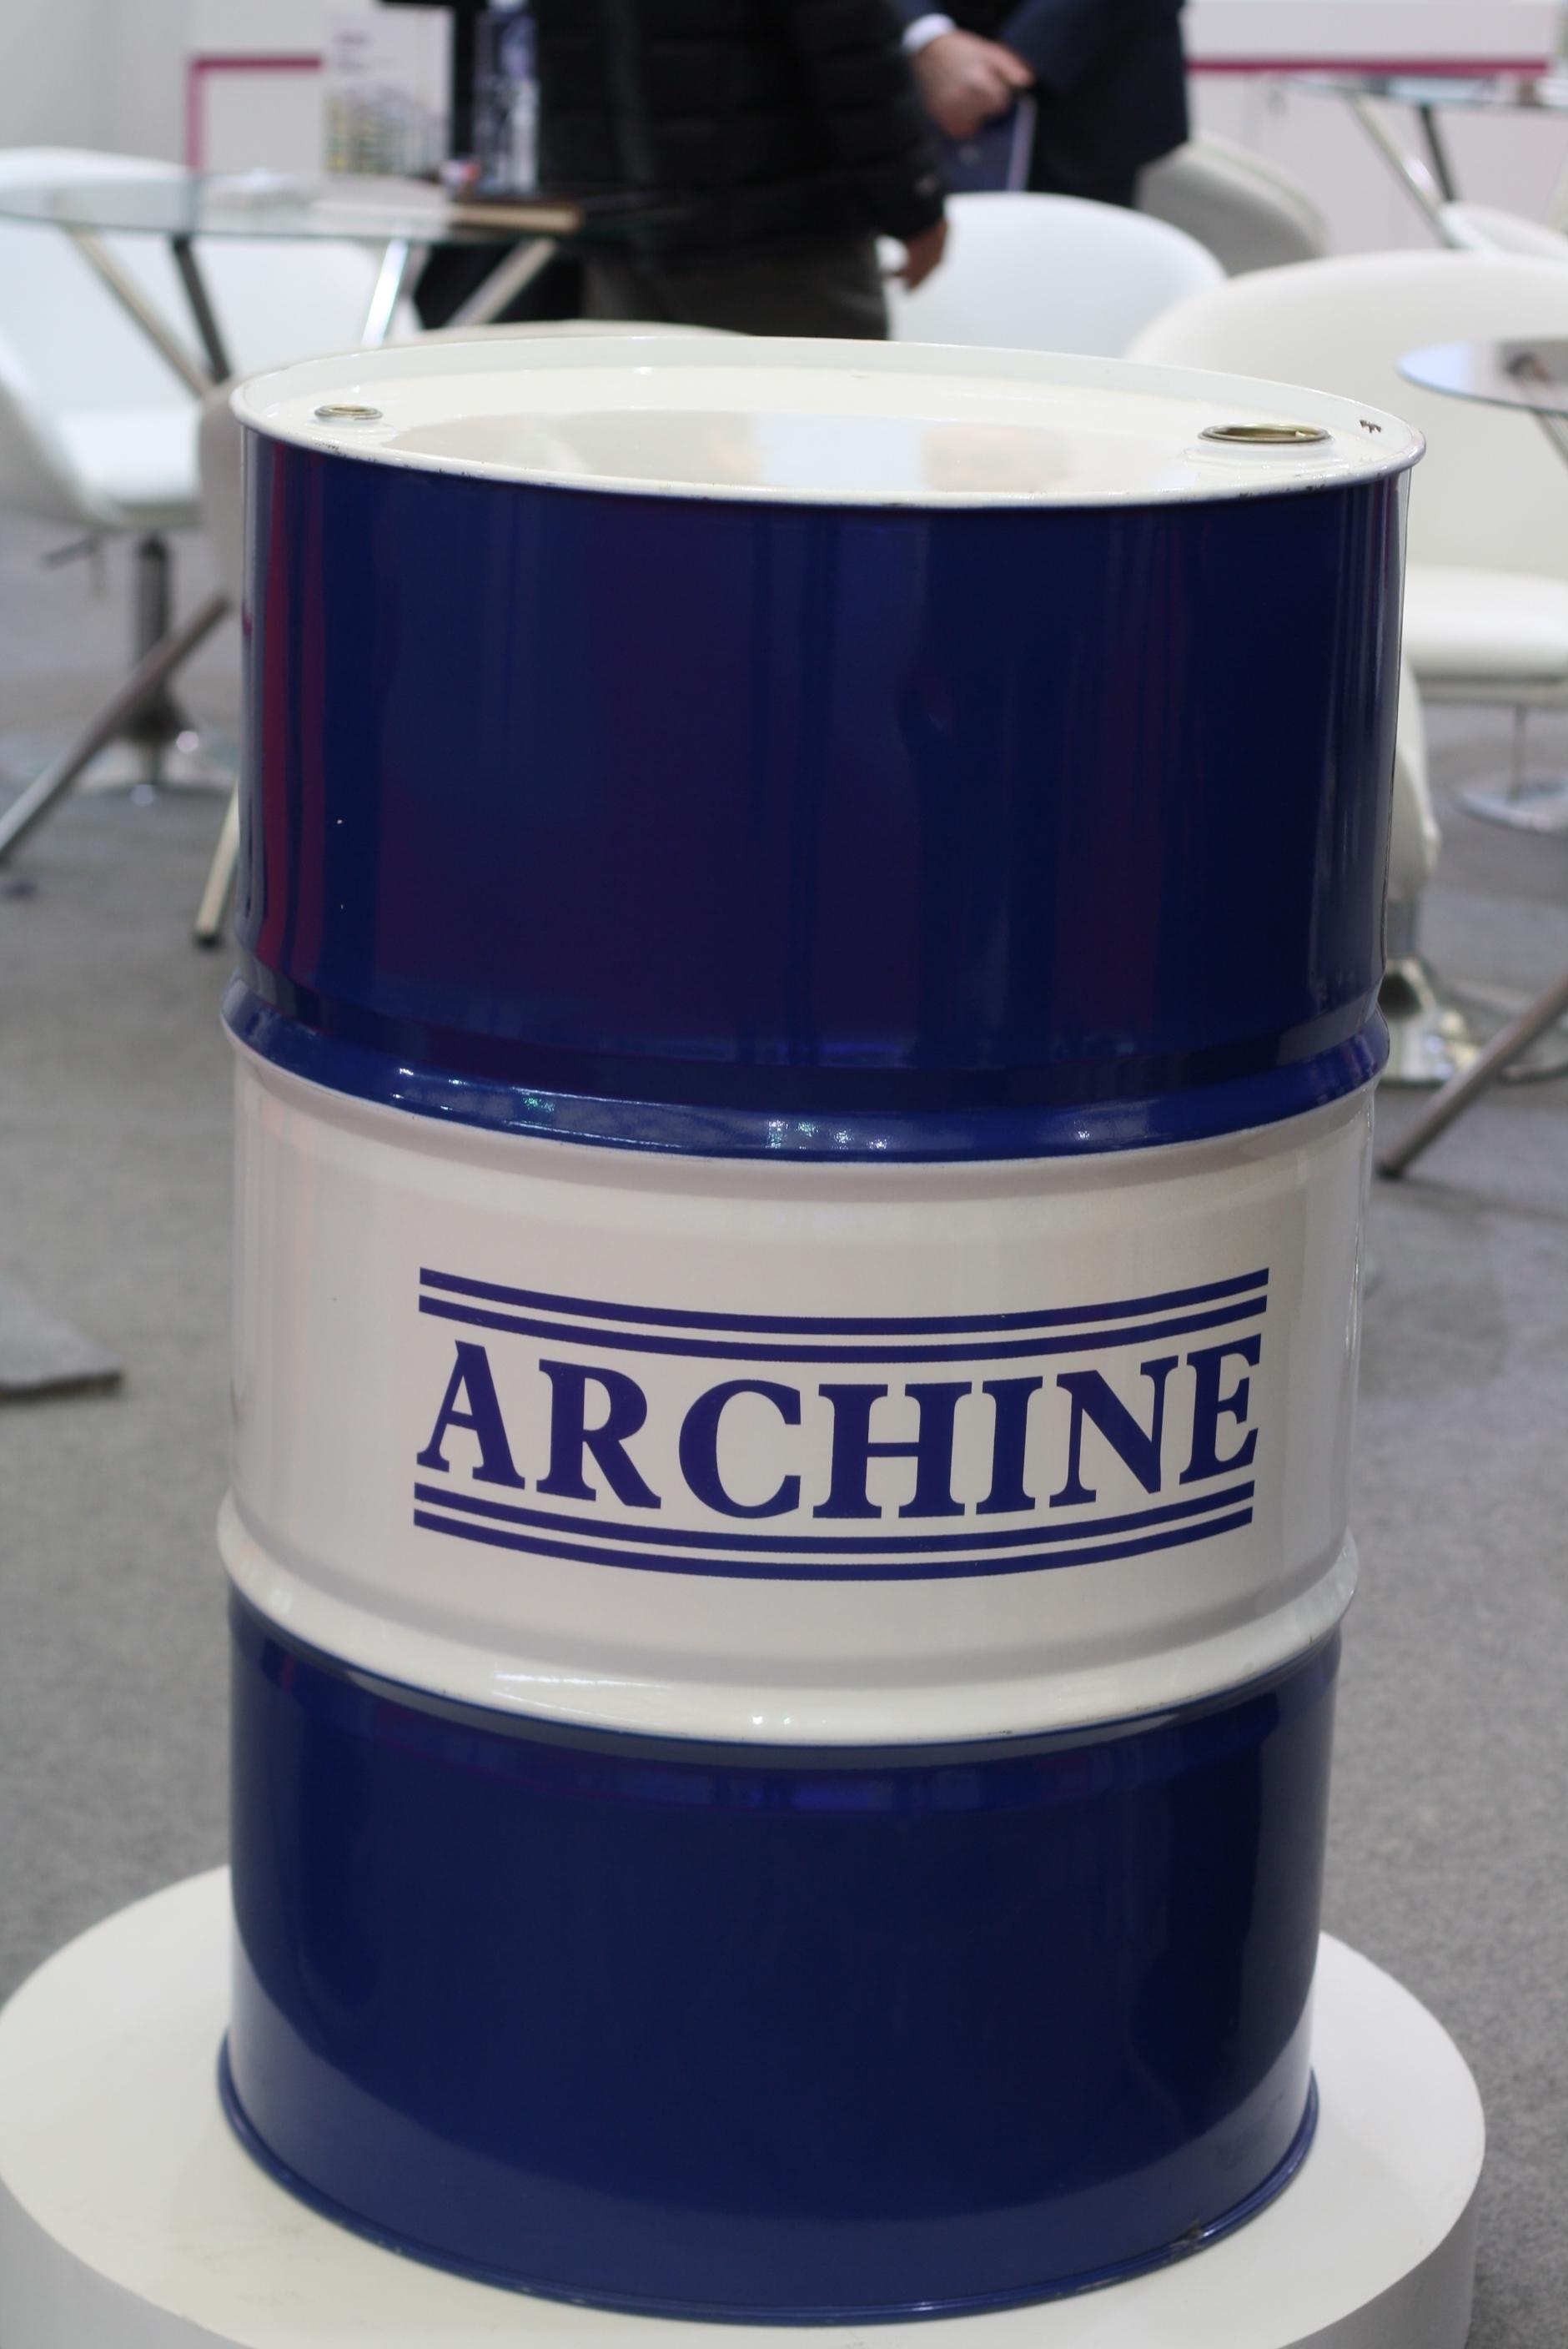 ArChine Arcfluid